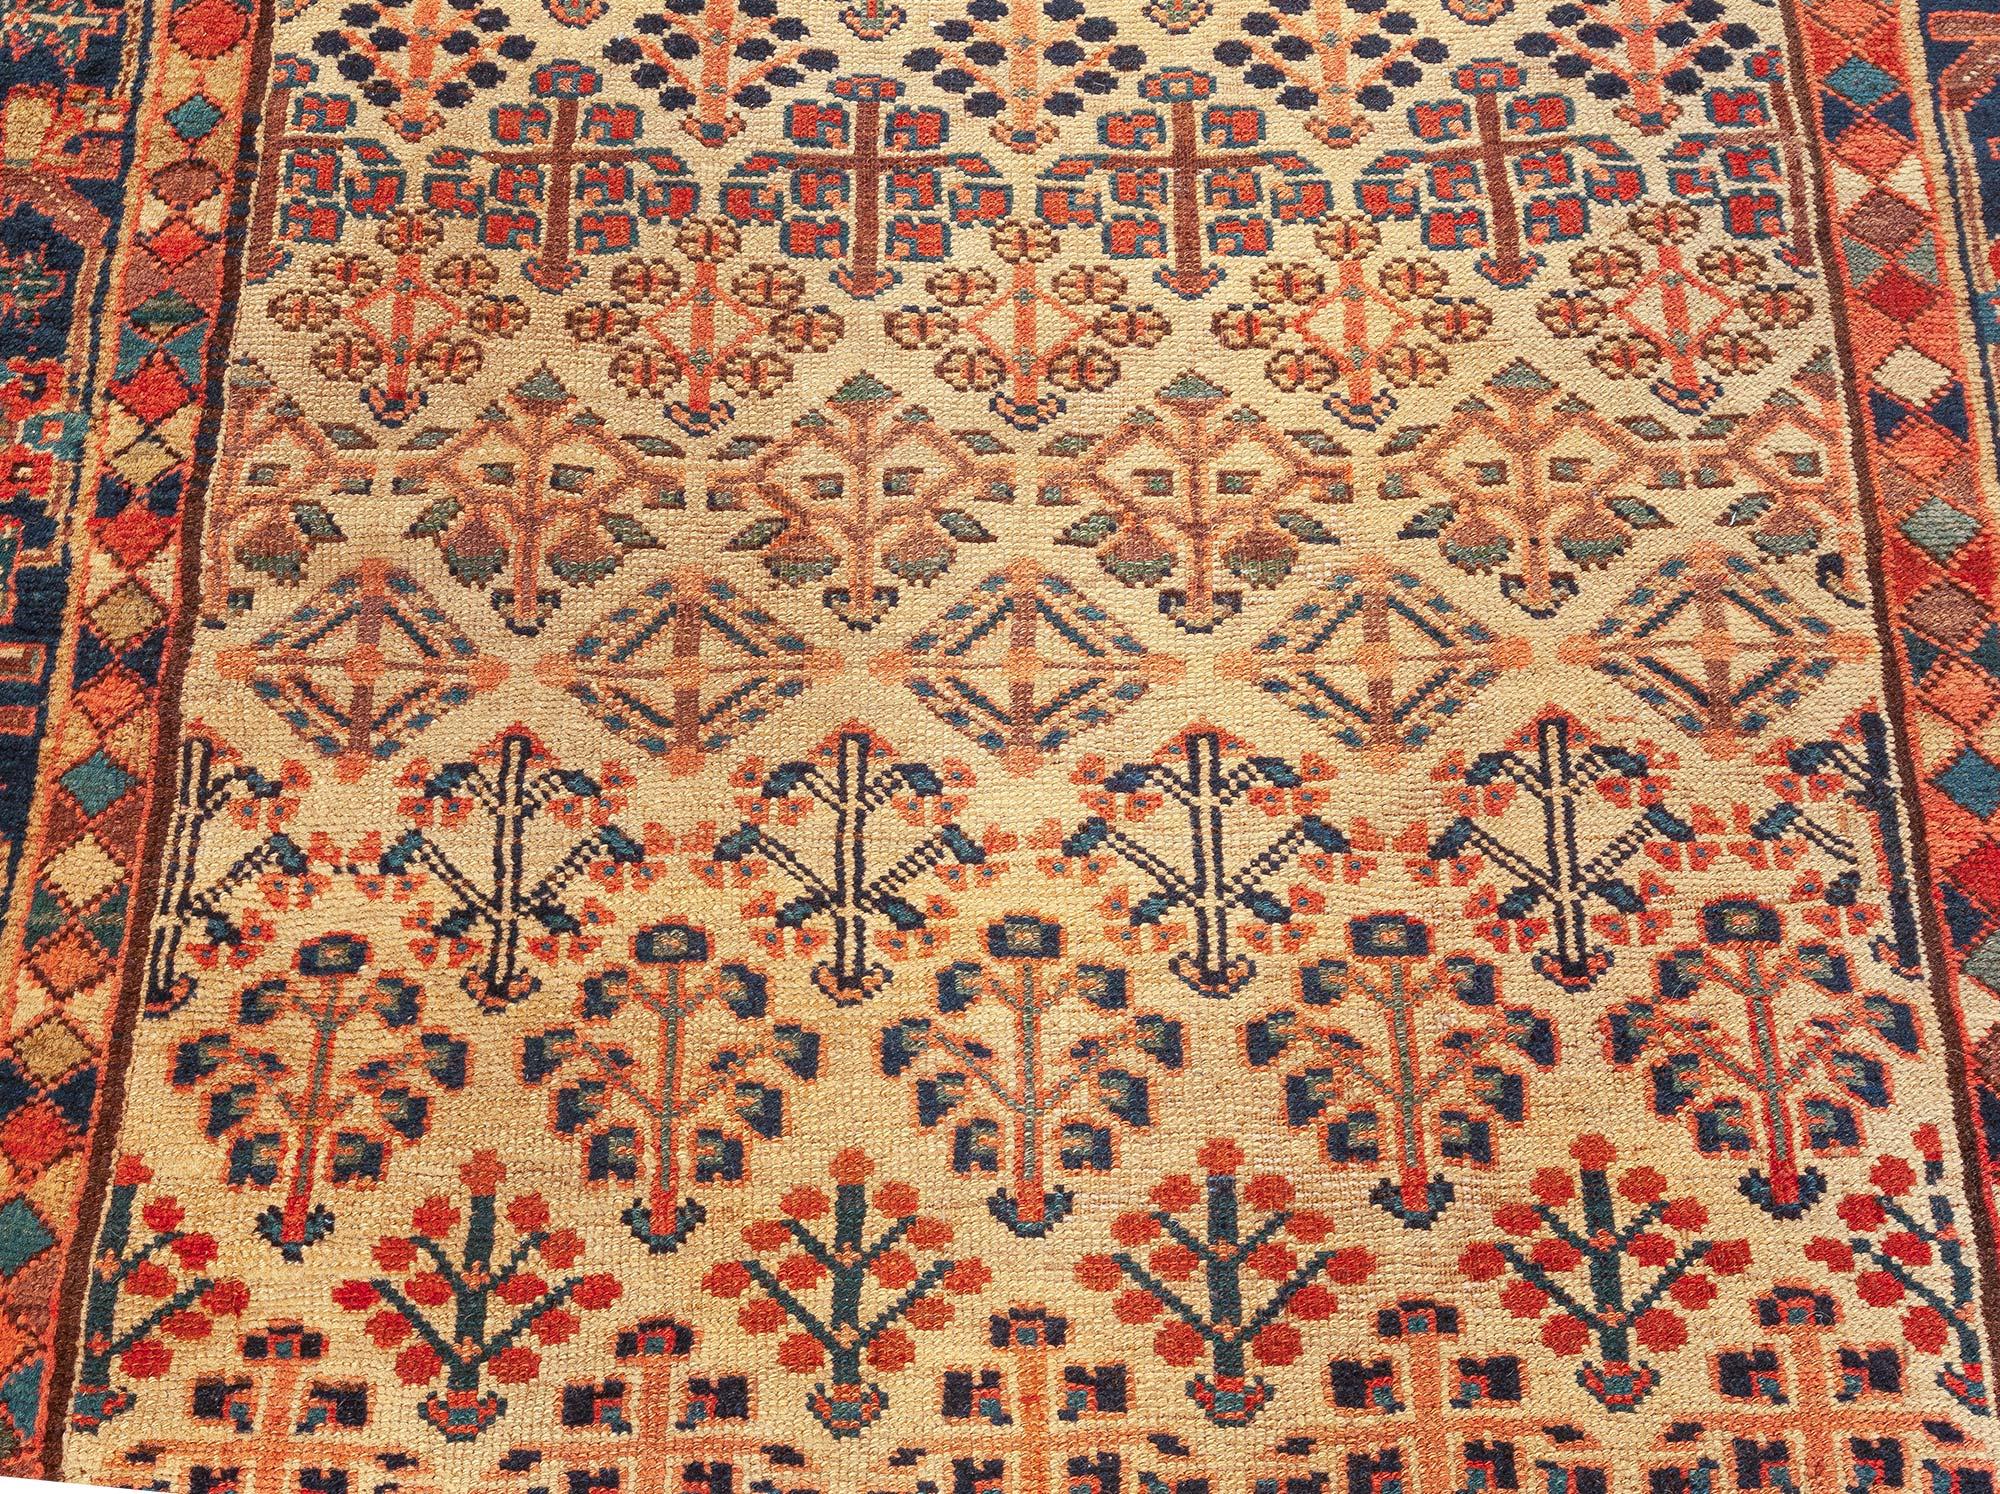 Antique Persian Hamadan rug (Size Adjusted)
Size: 3'10